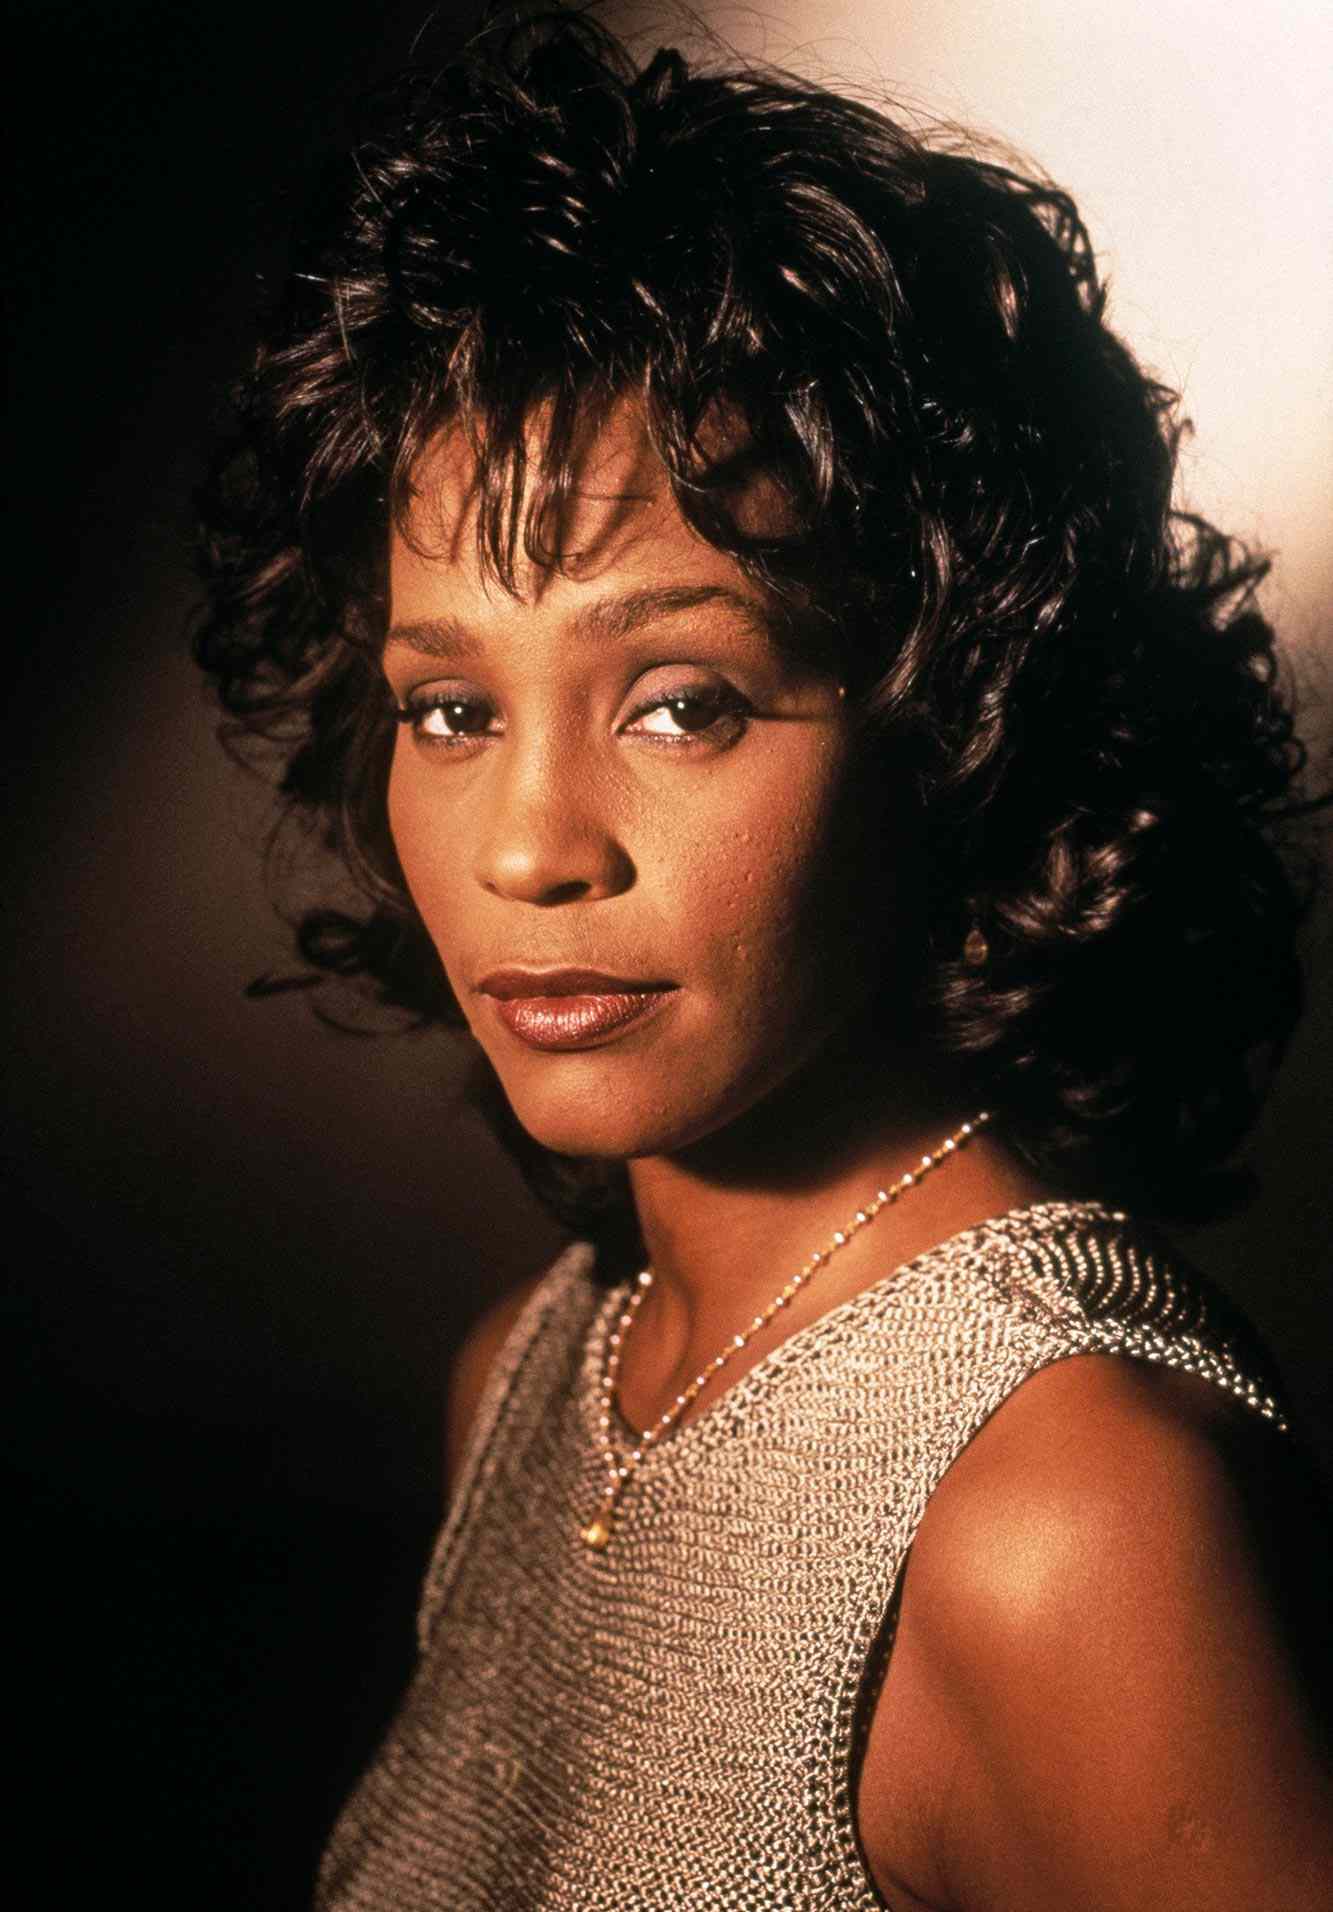 Whitney Houston, 1963-2012